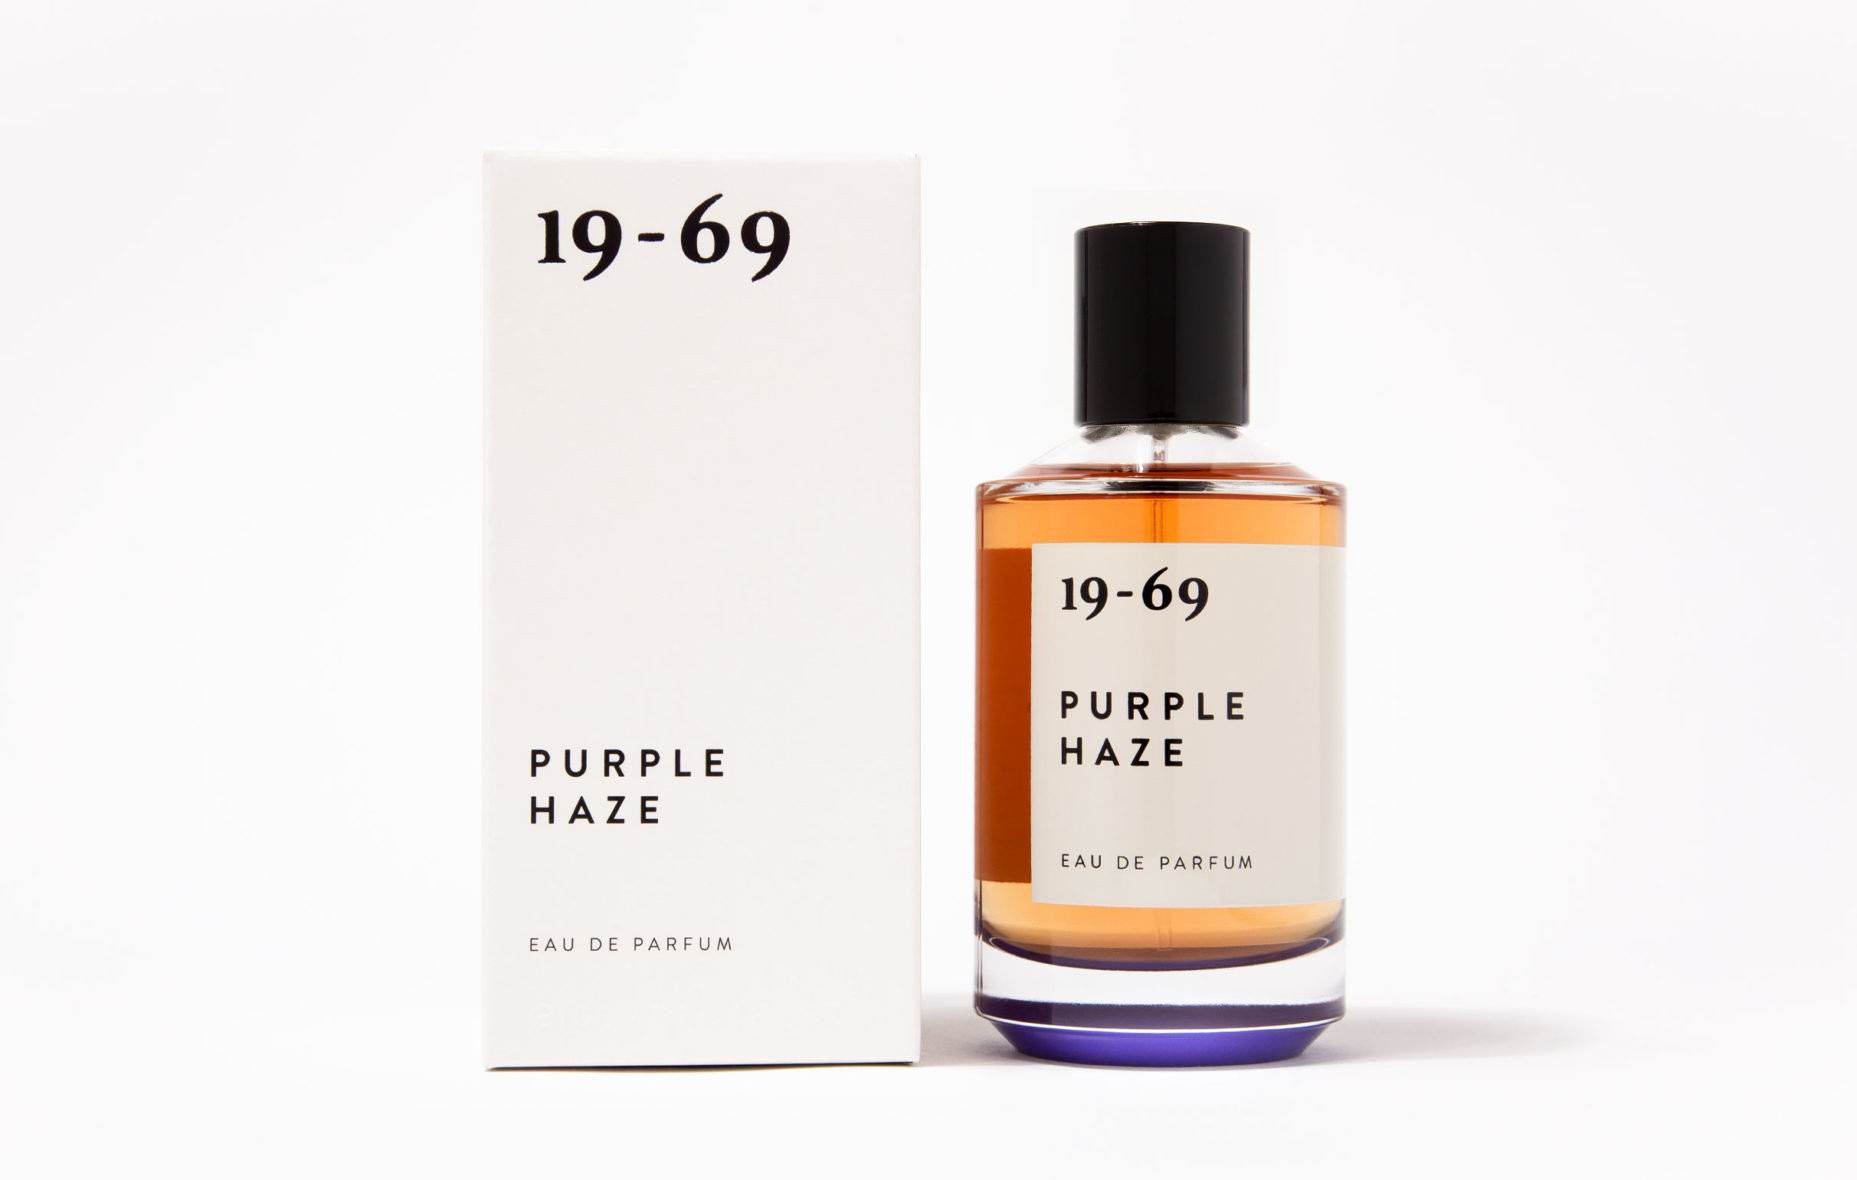  Najbolji noćni miris: 19-69, Purple Haze 